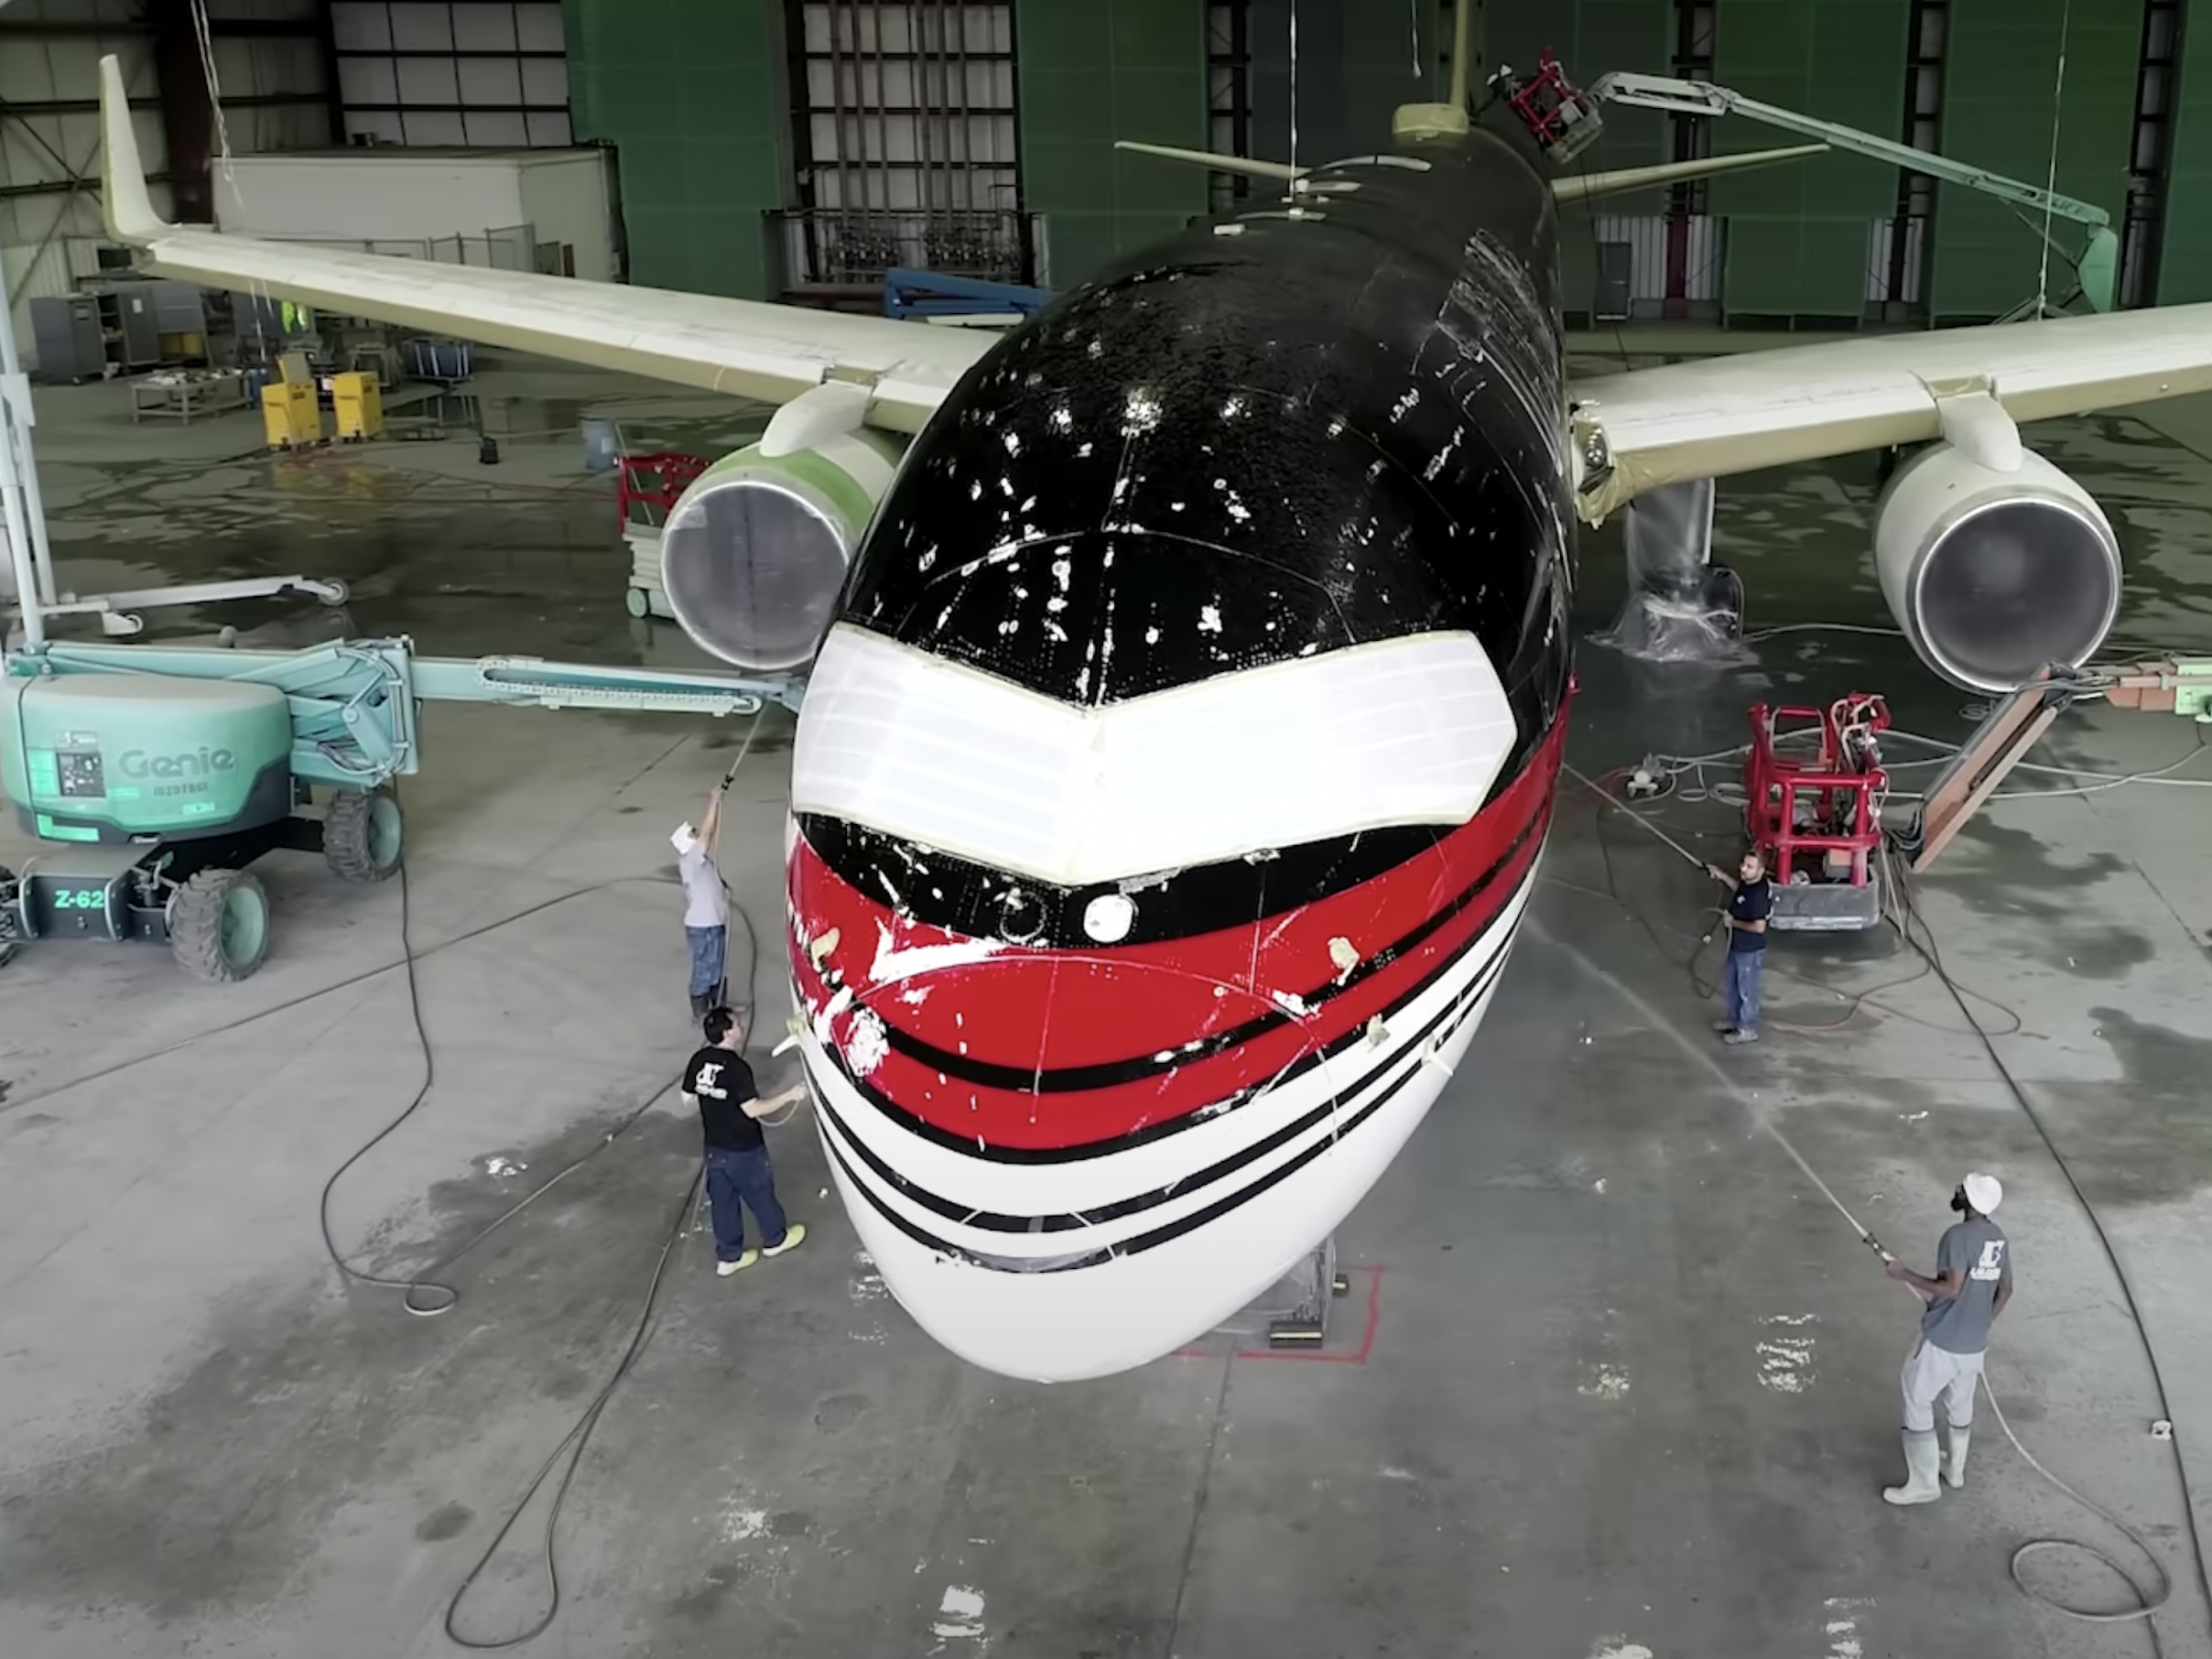 Trump's 757 getting a new paint job.